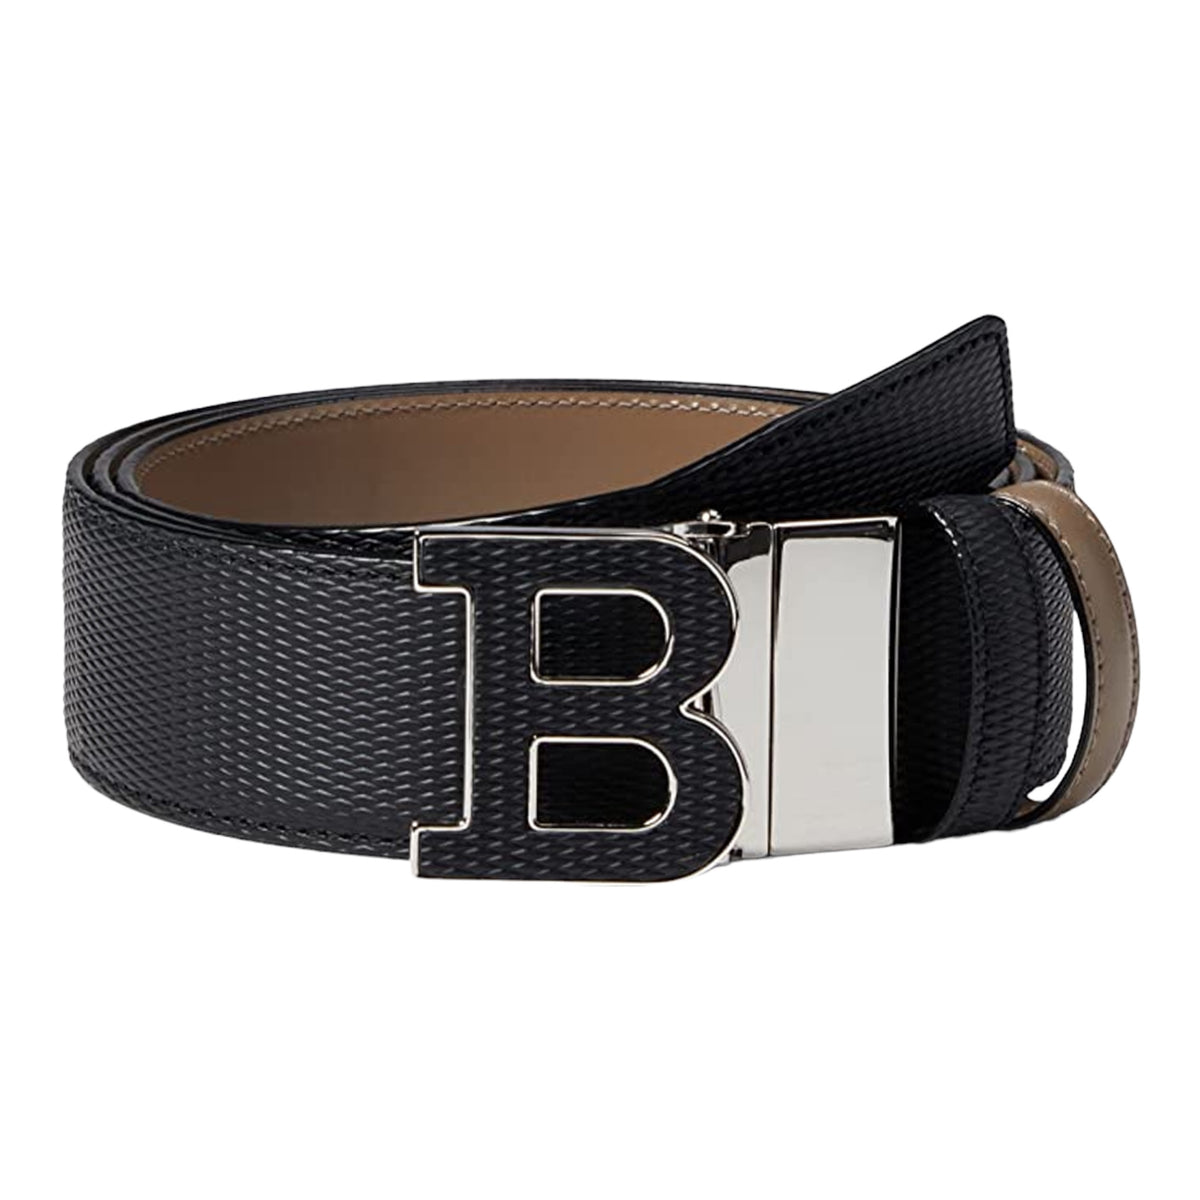 Bally Men's B Buckle 40mm Reversible Leather Belt